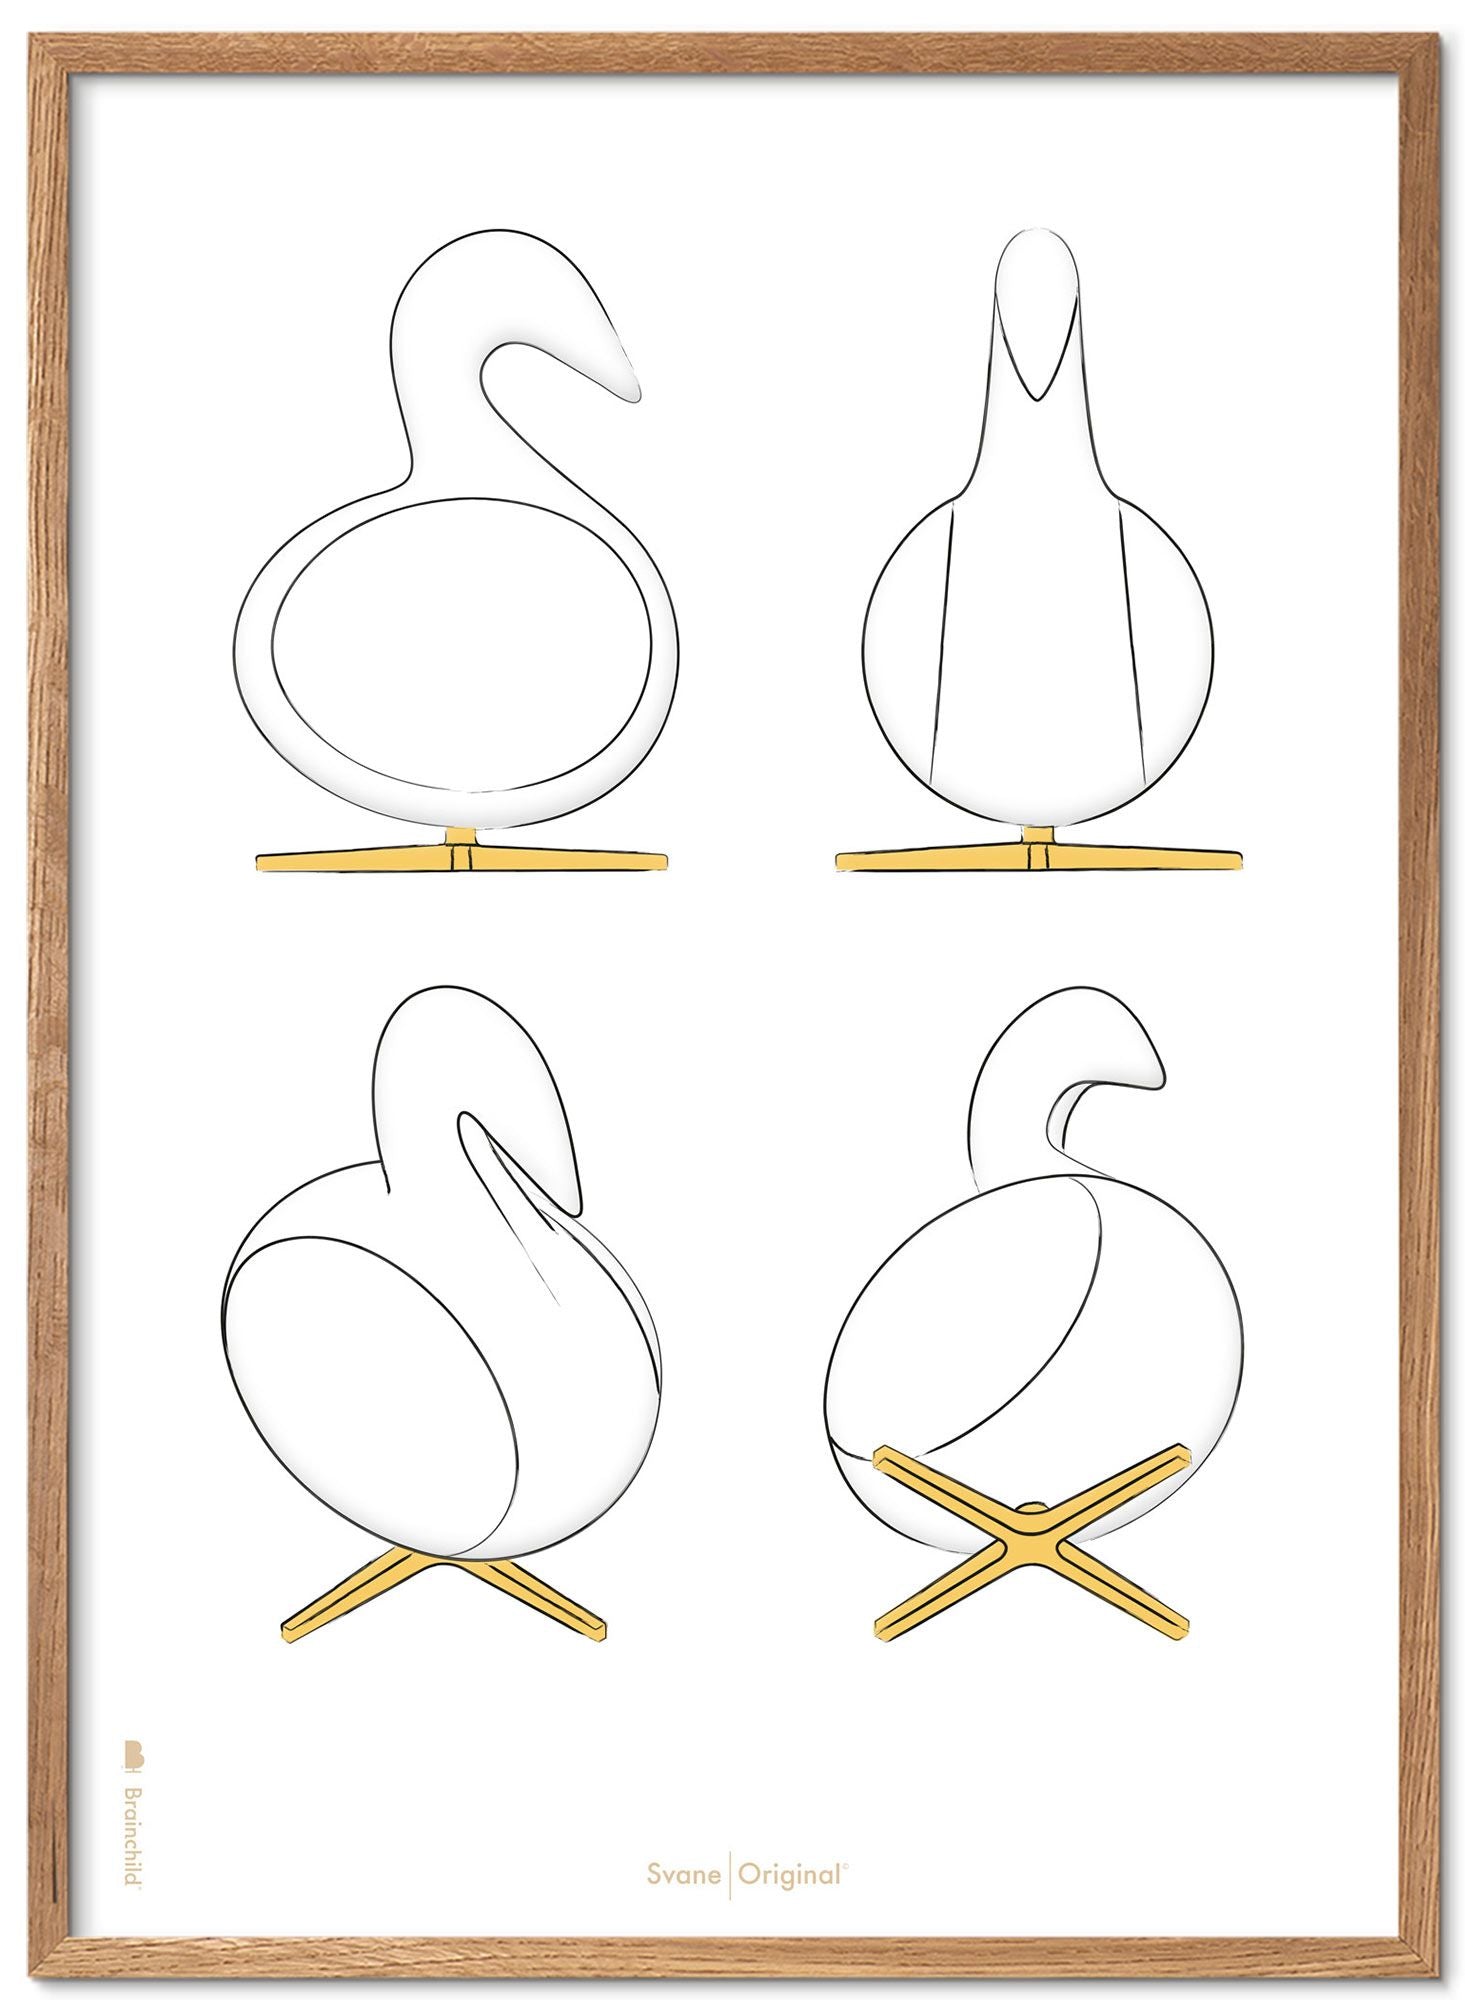 Brainchild Swan Design Sketches Poster Frame Made Of Light Wood 50x70 Cm, White Background